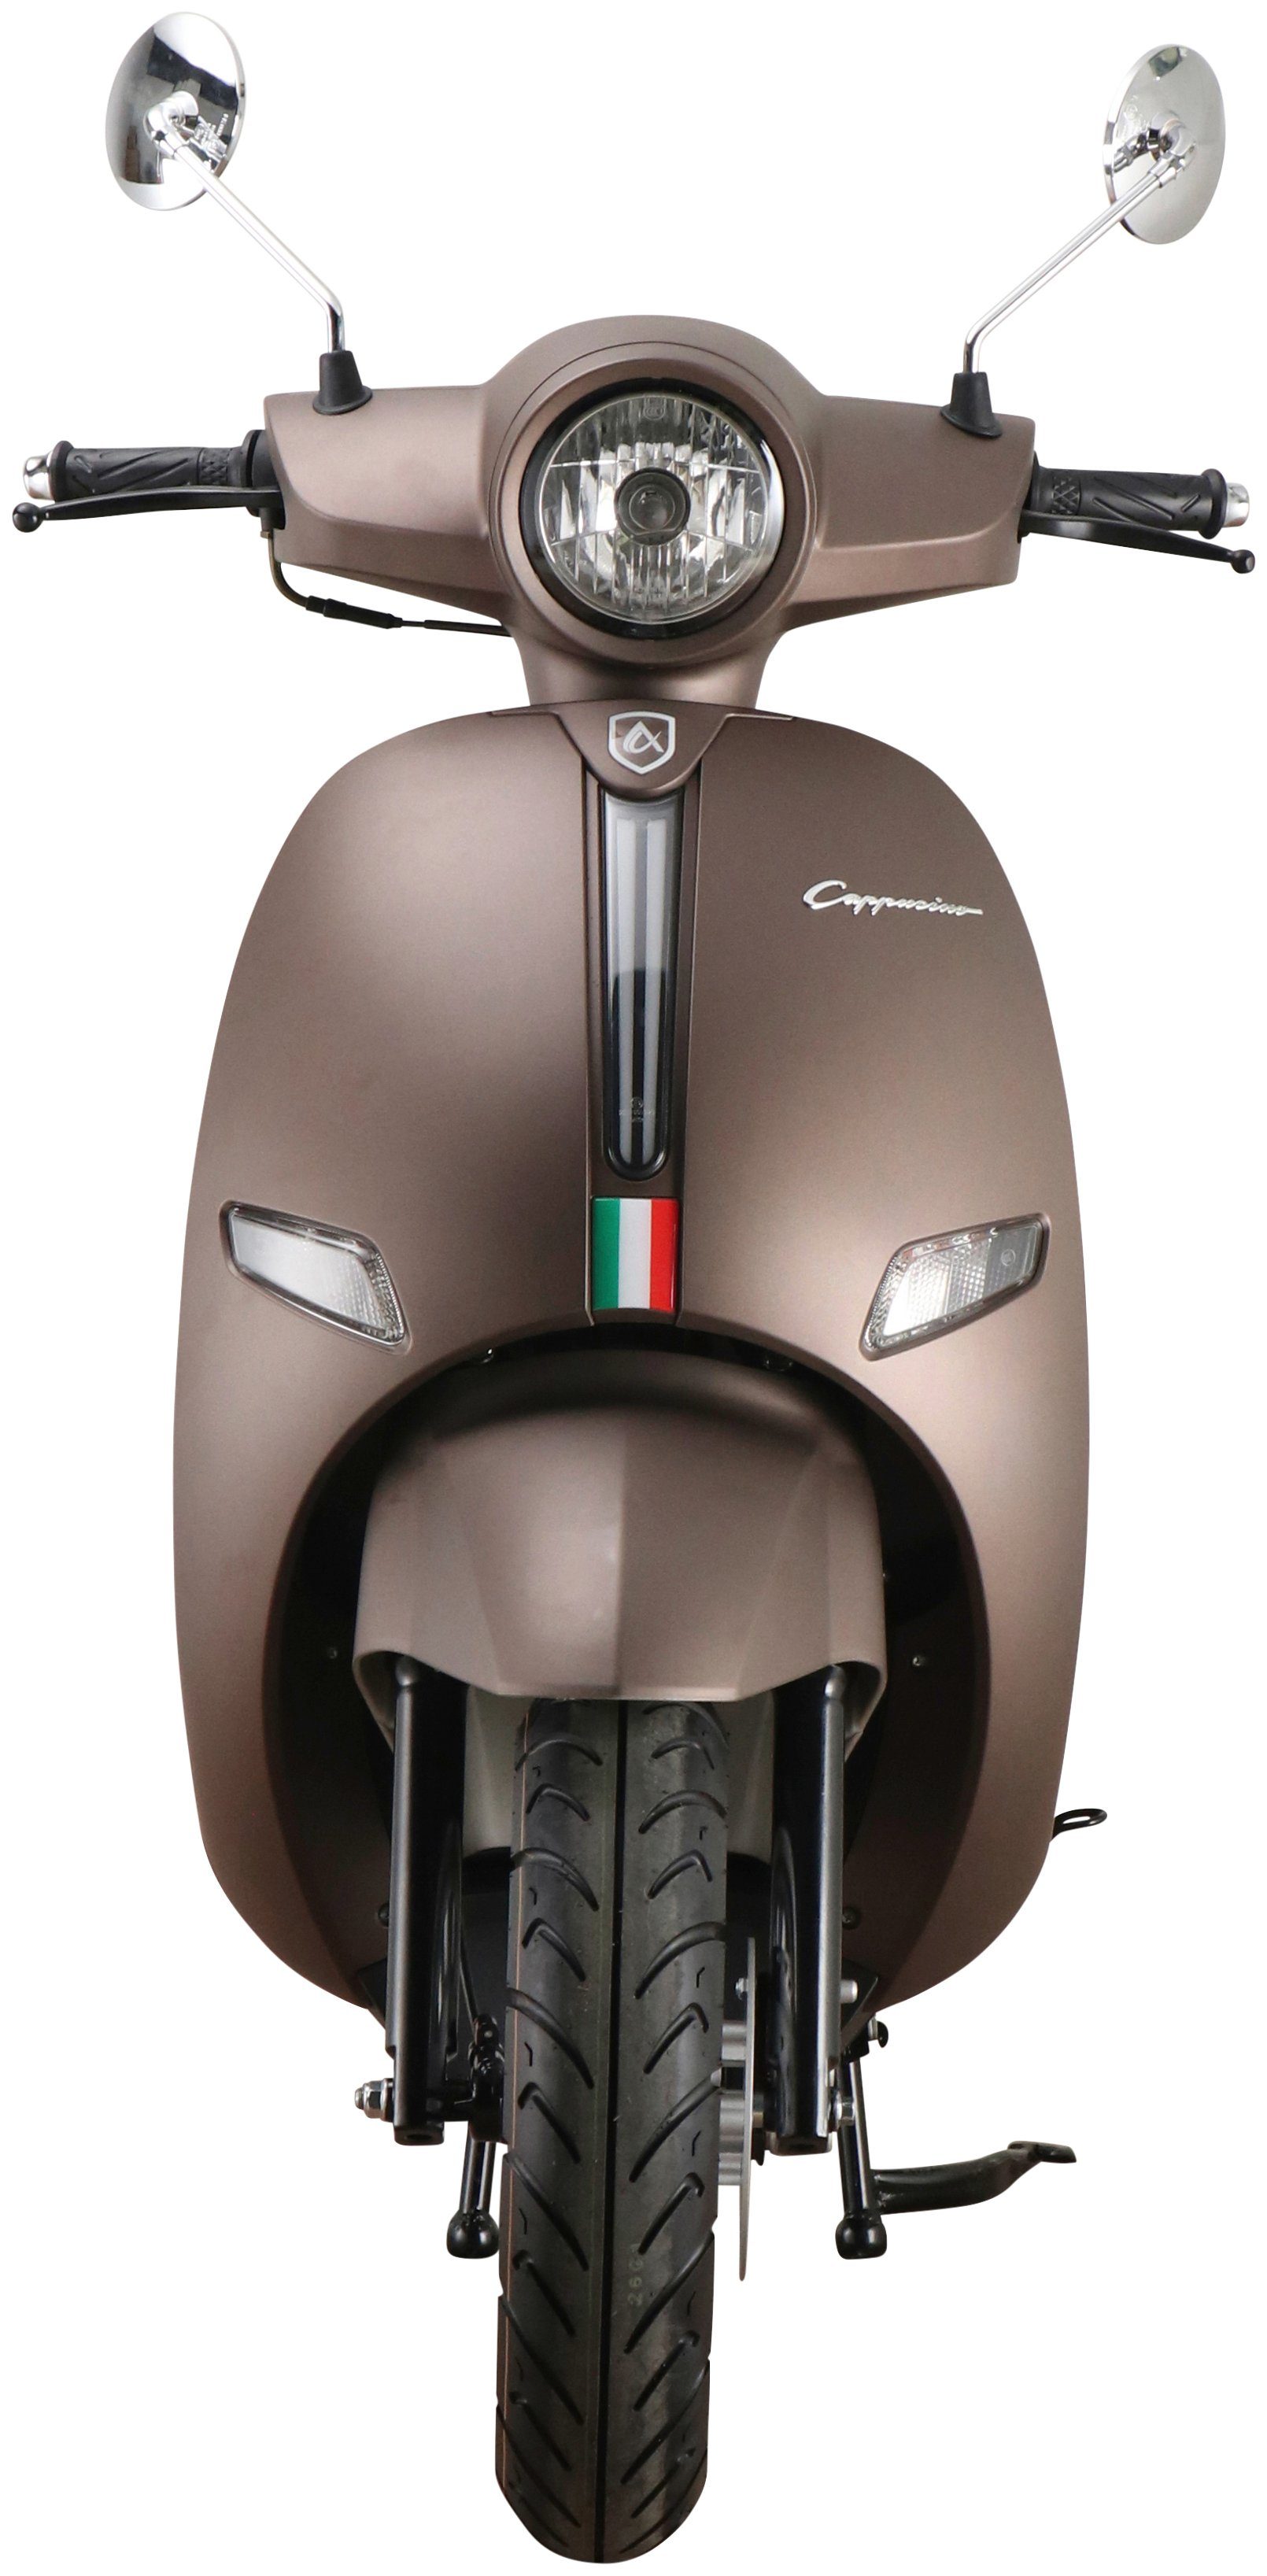 Cappucino, 5 50 Motorroller Euro Motors Alpha 45 ccm, km/h,